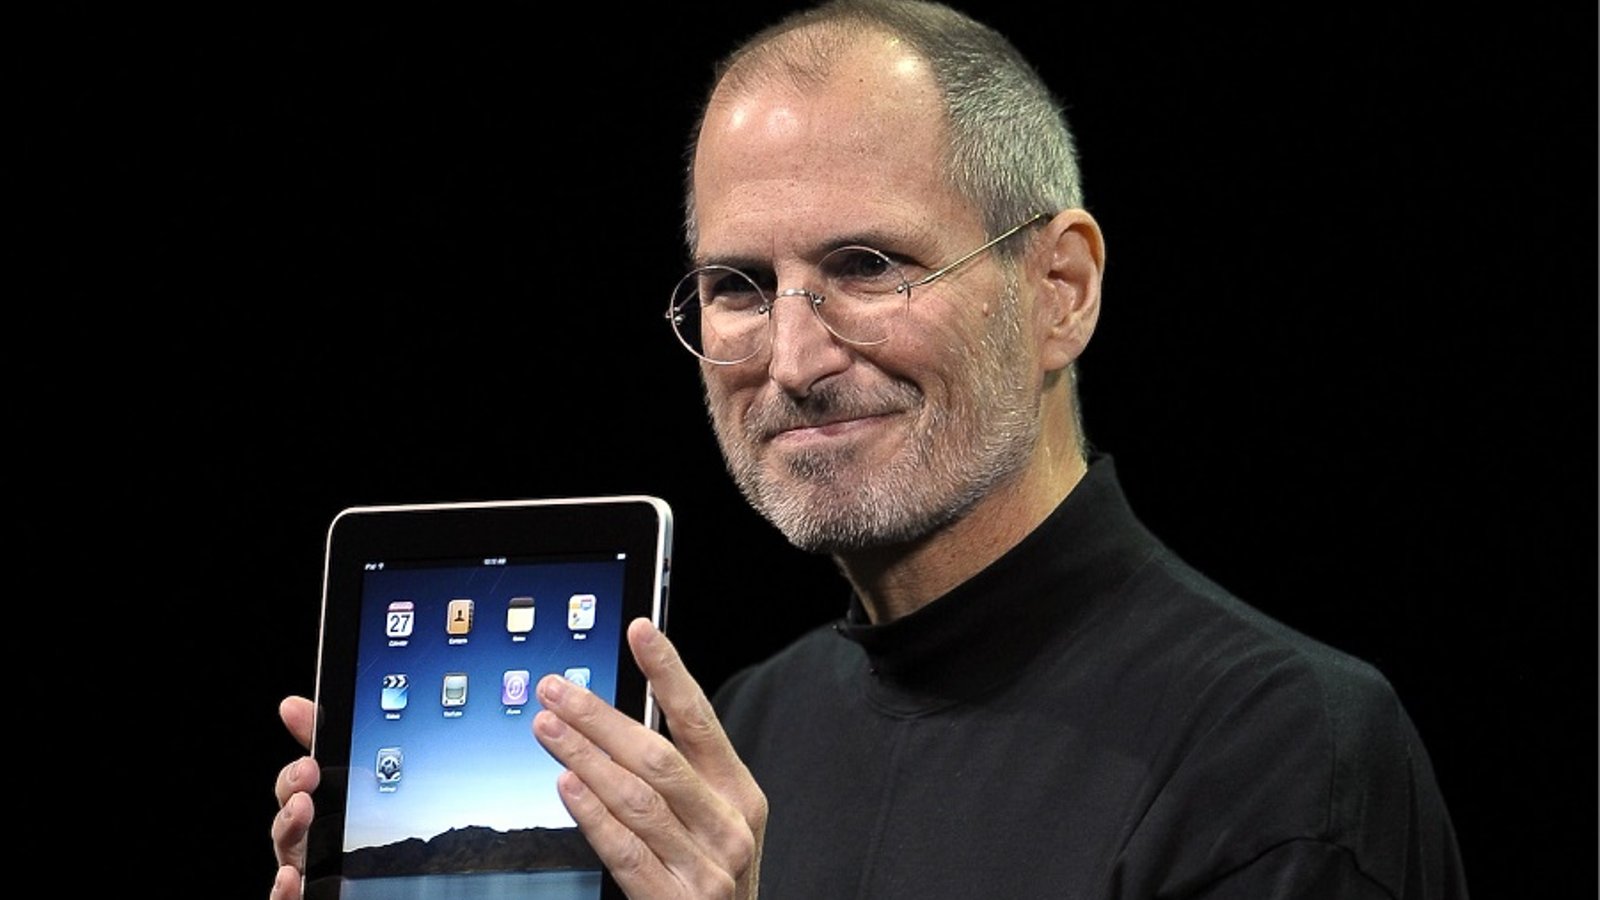 Steve Jobs: iGenius